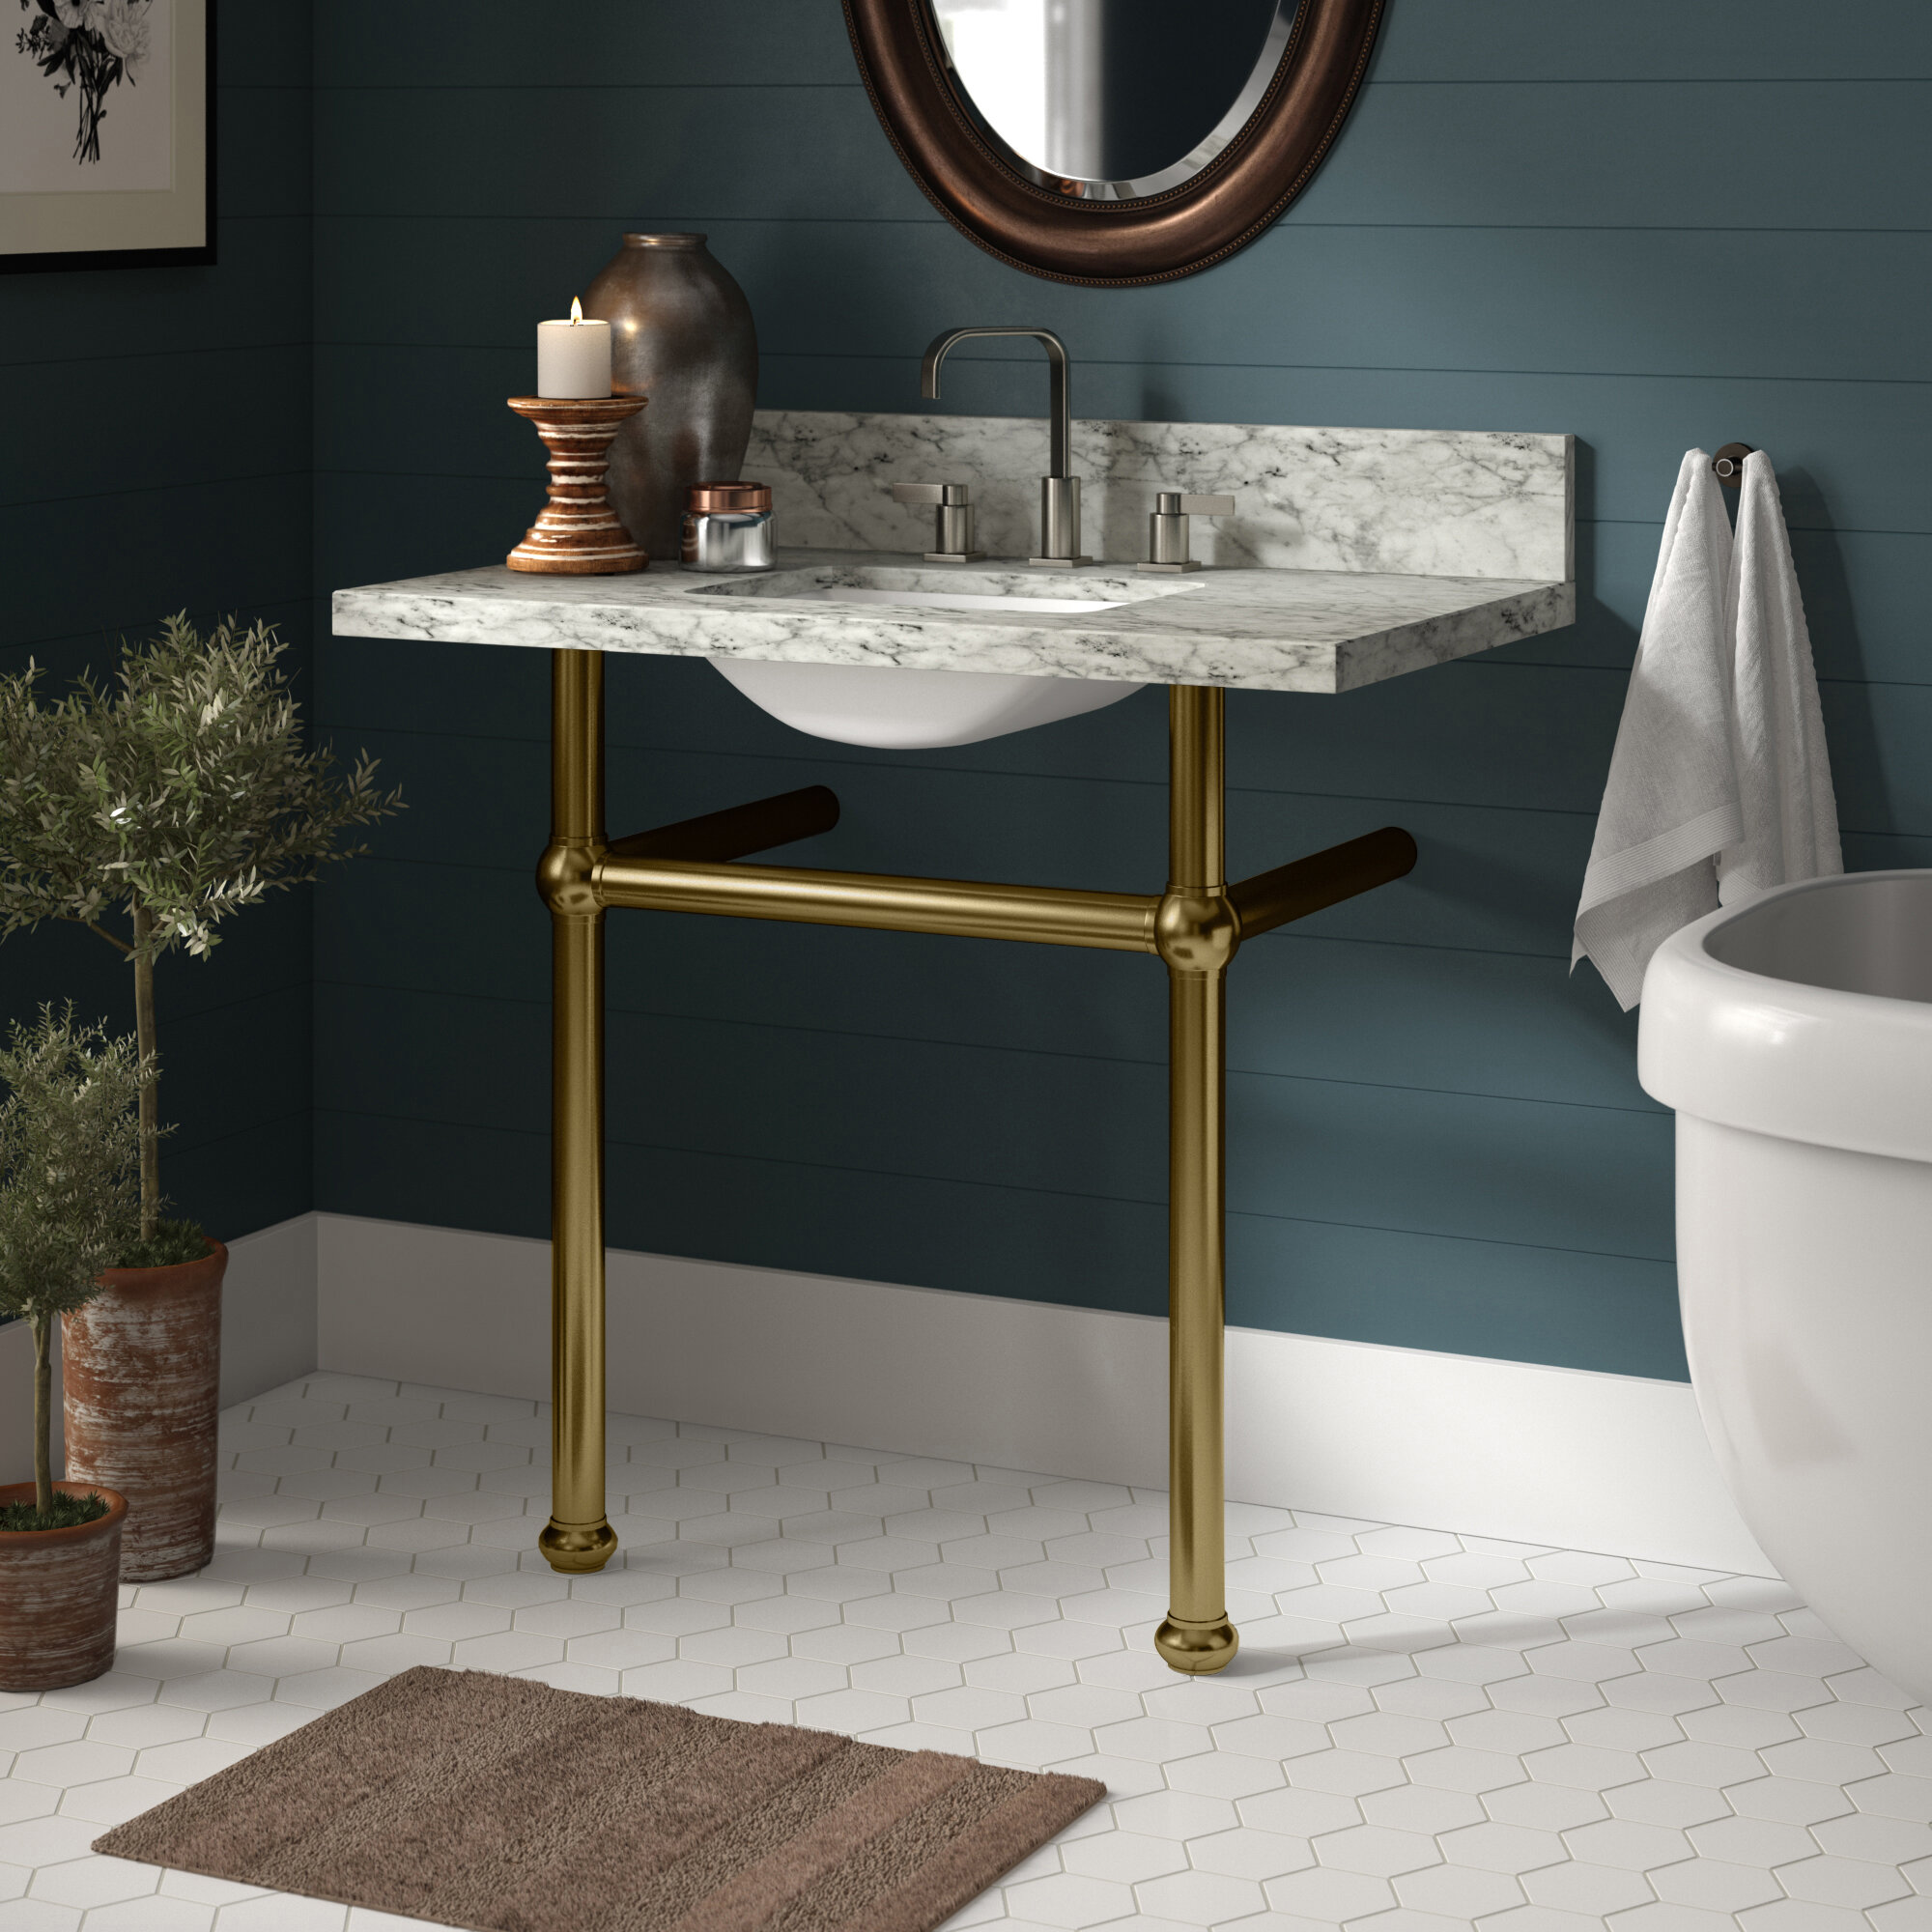 Kingston Brass Carrara Marble 36 Single Bathroom Vanity Set